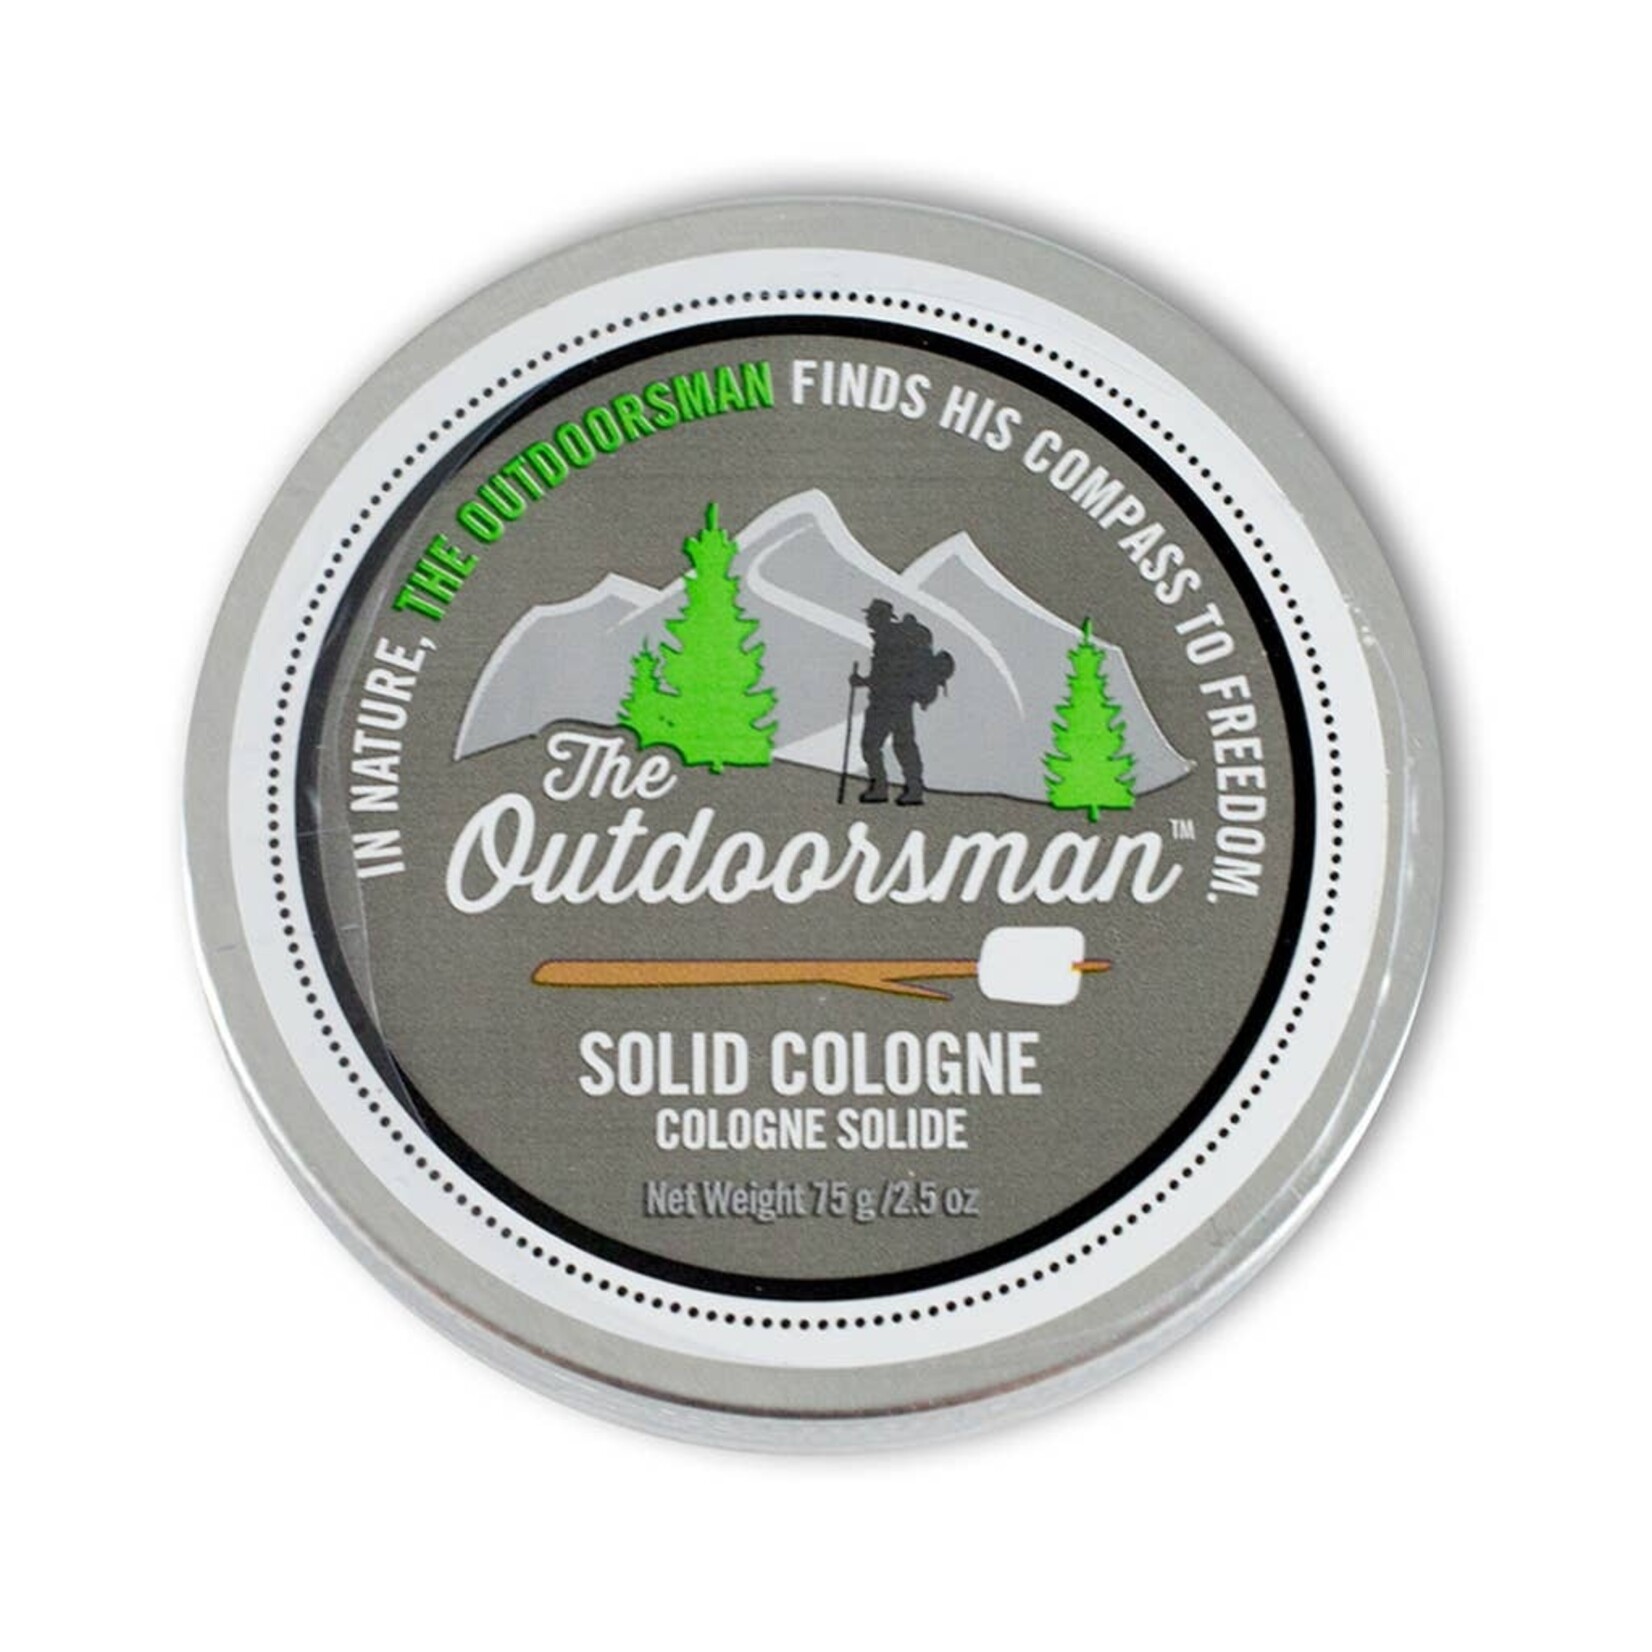 Walton Wood Farm Corp. Solid Cologne - The Outdoorsman 2.5 oz